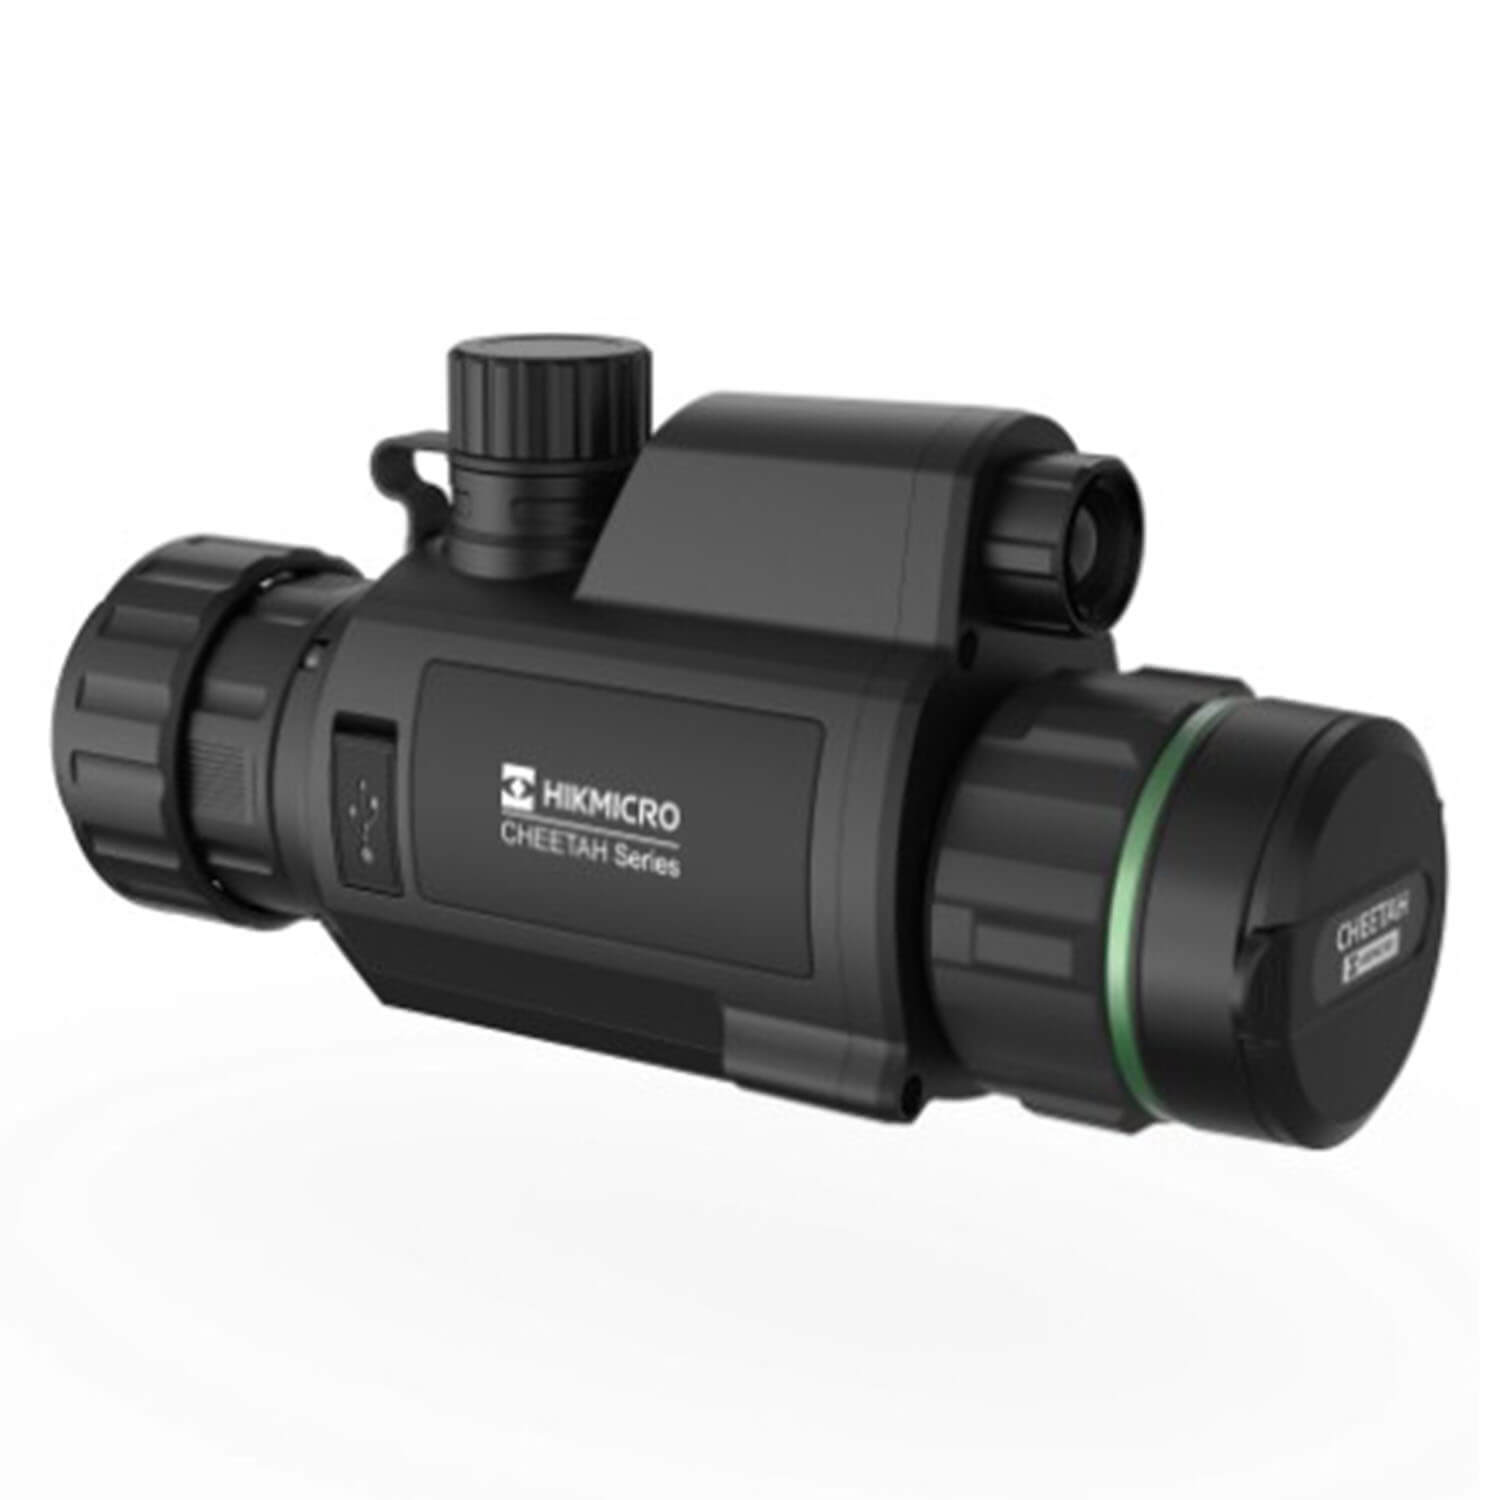 Hikmicro digital night vision device Cheetah 940nm - Night Vision Devices